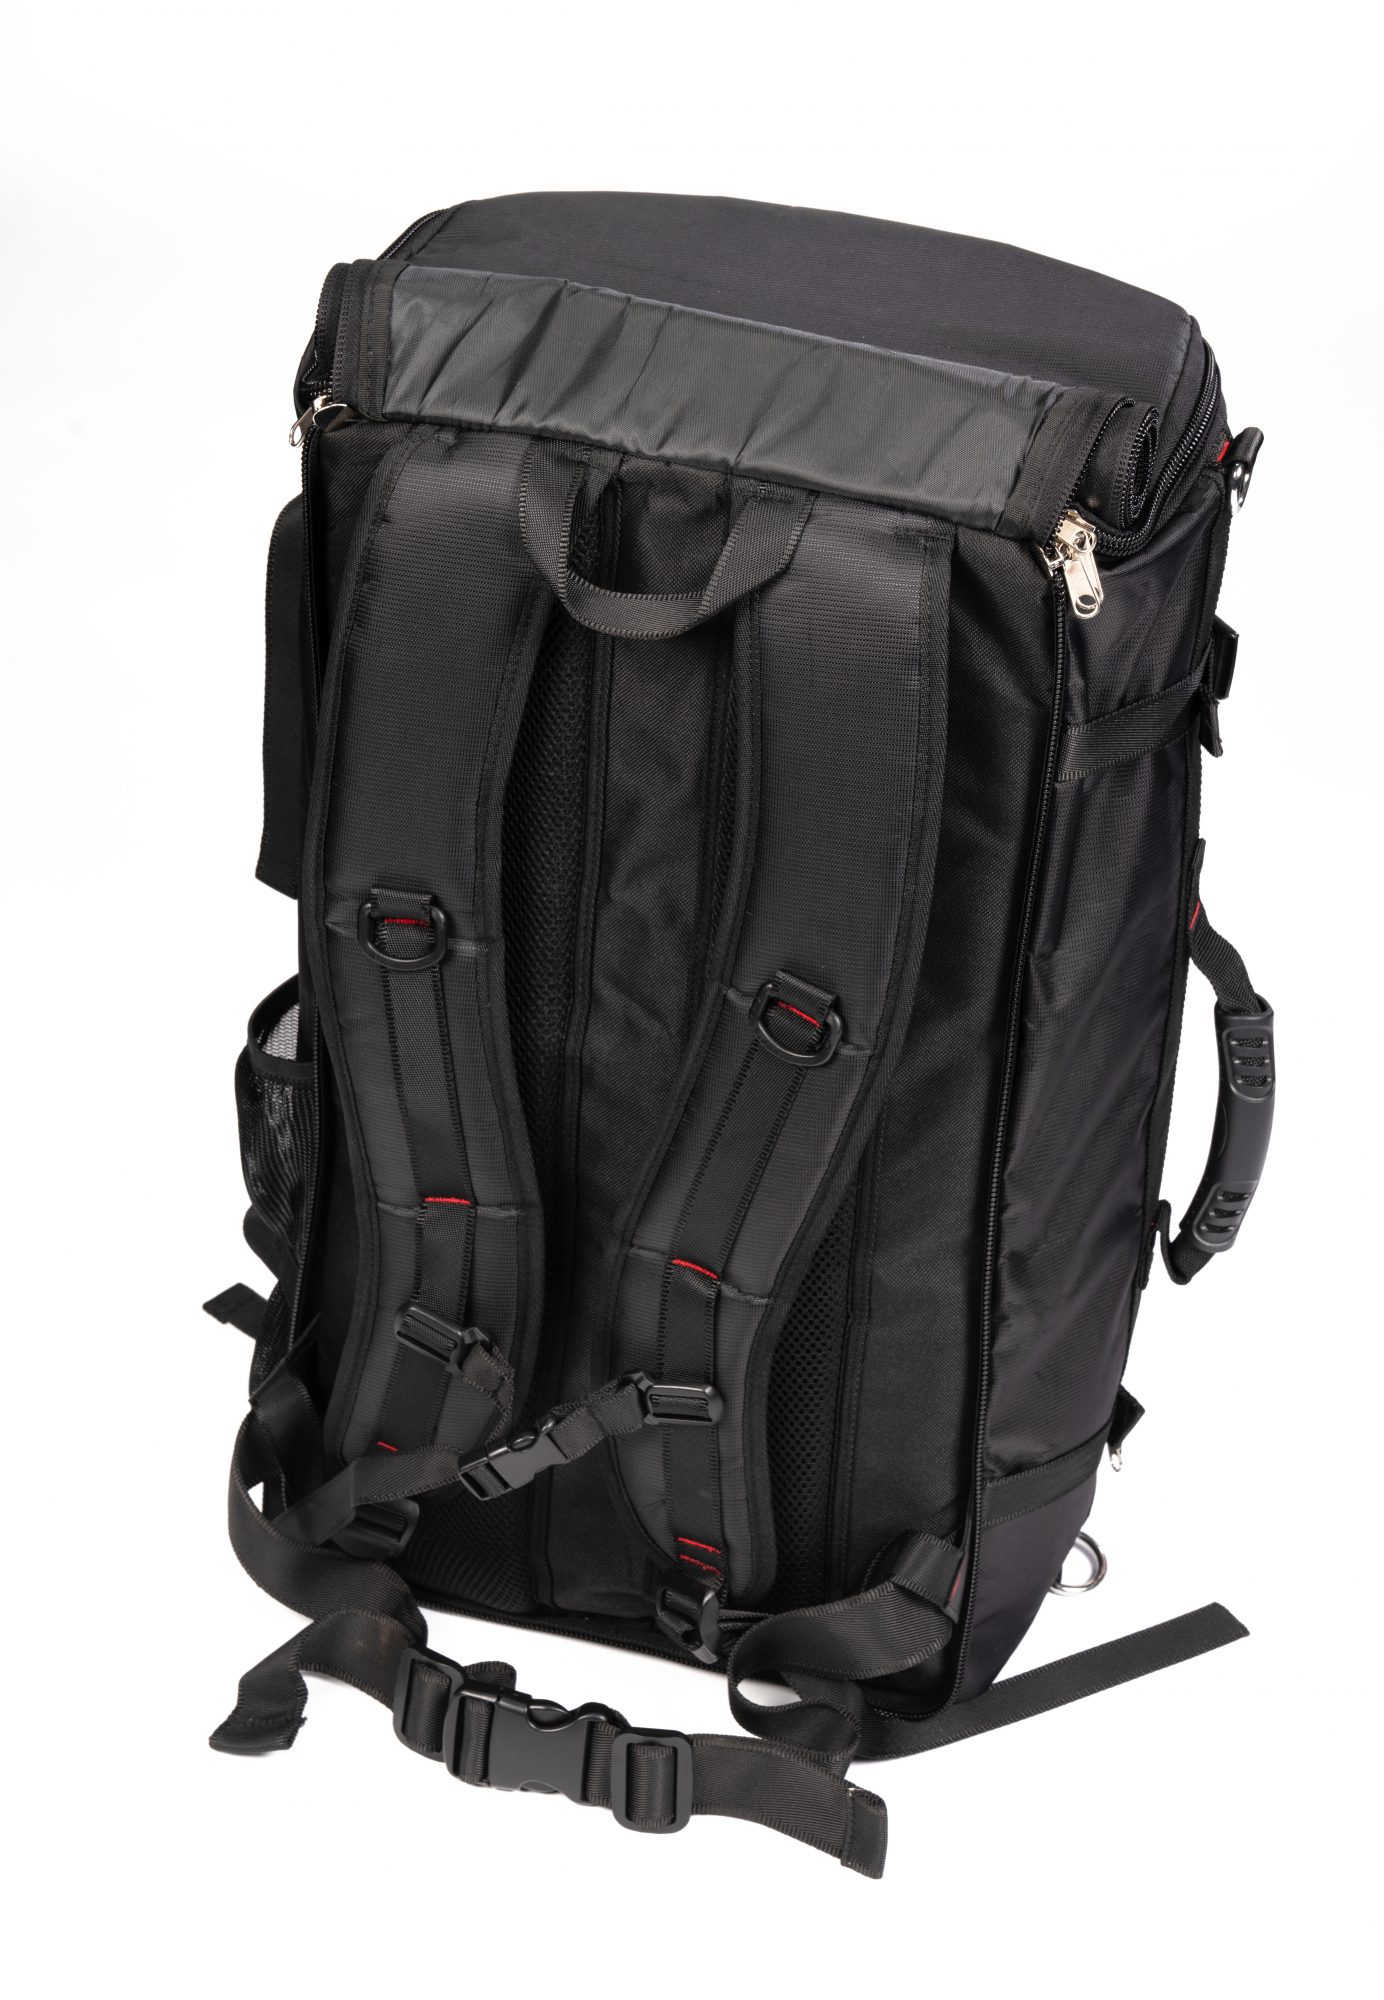 PKT Travel Gym Bag|TempleHP|PhysioKinetix|Travel Gear